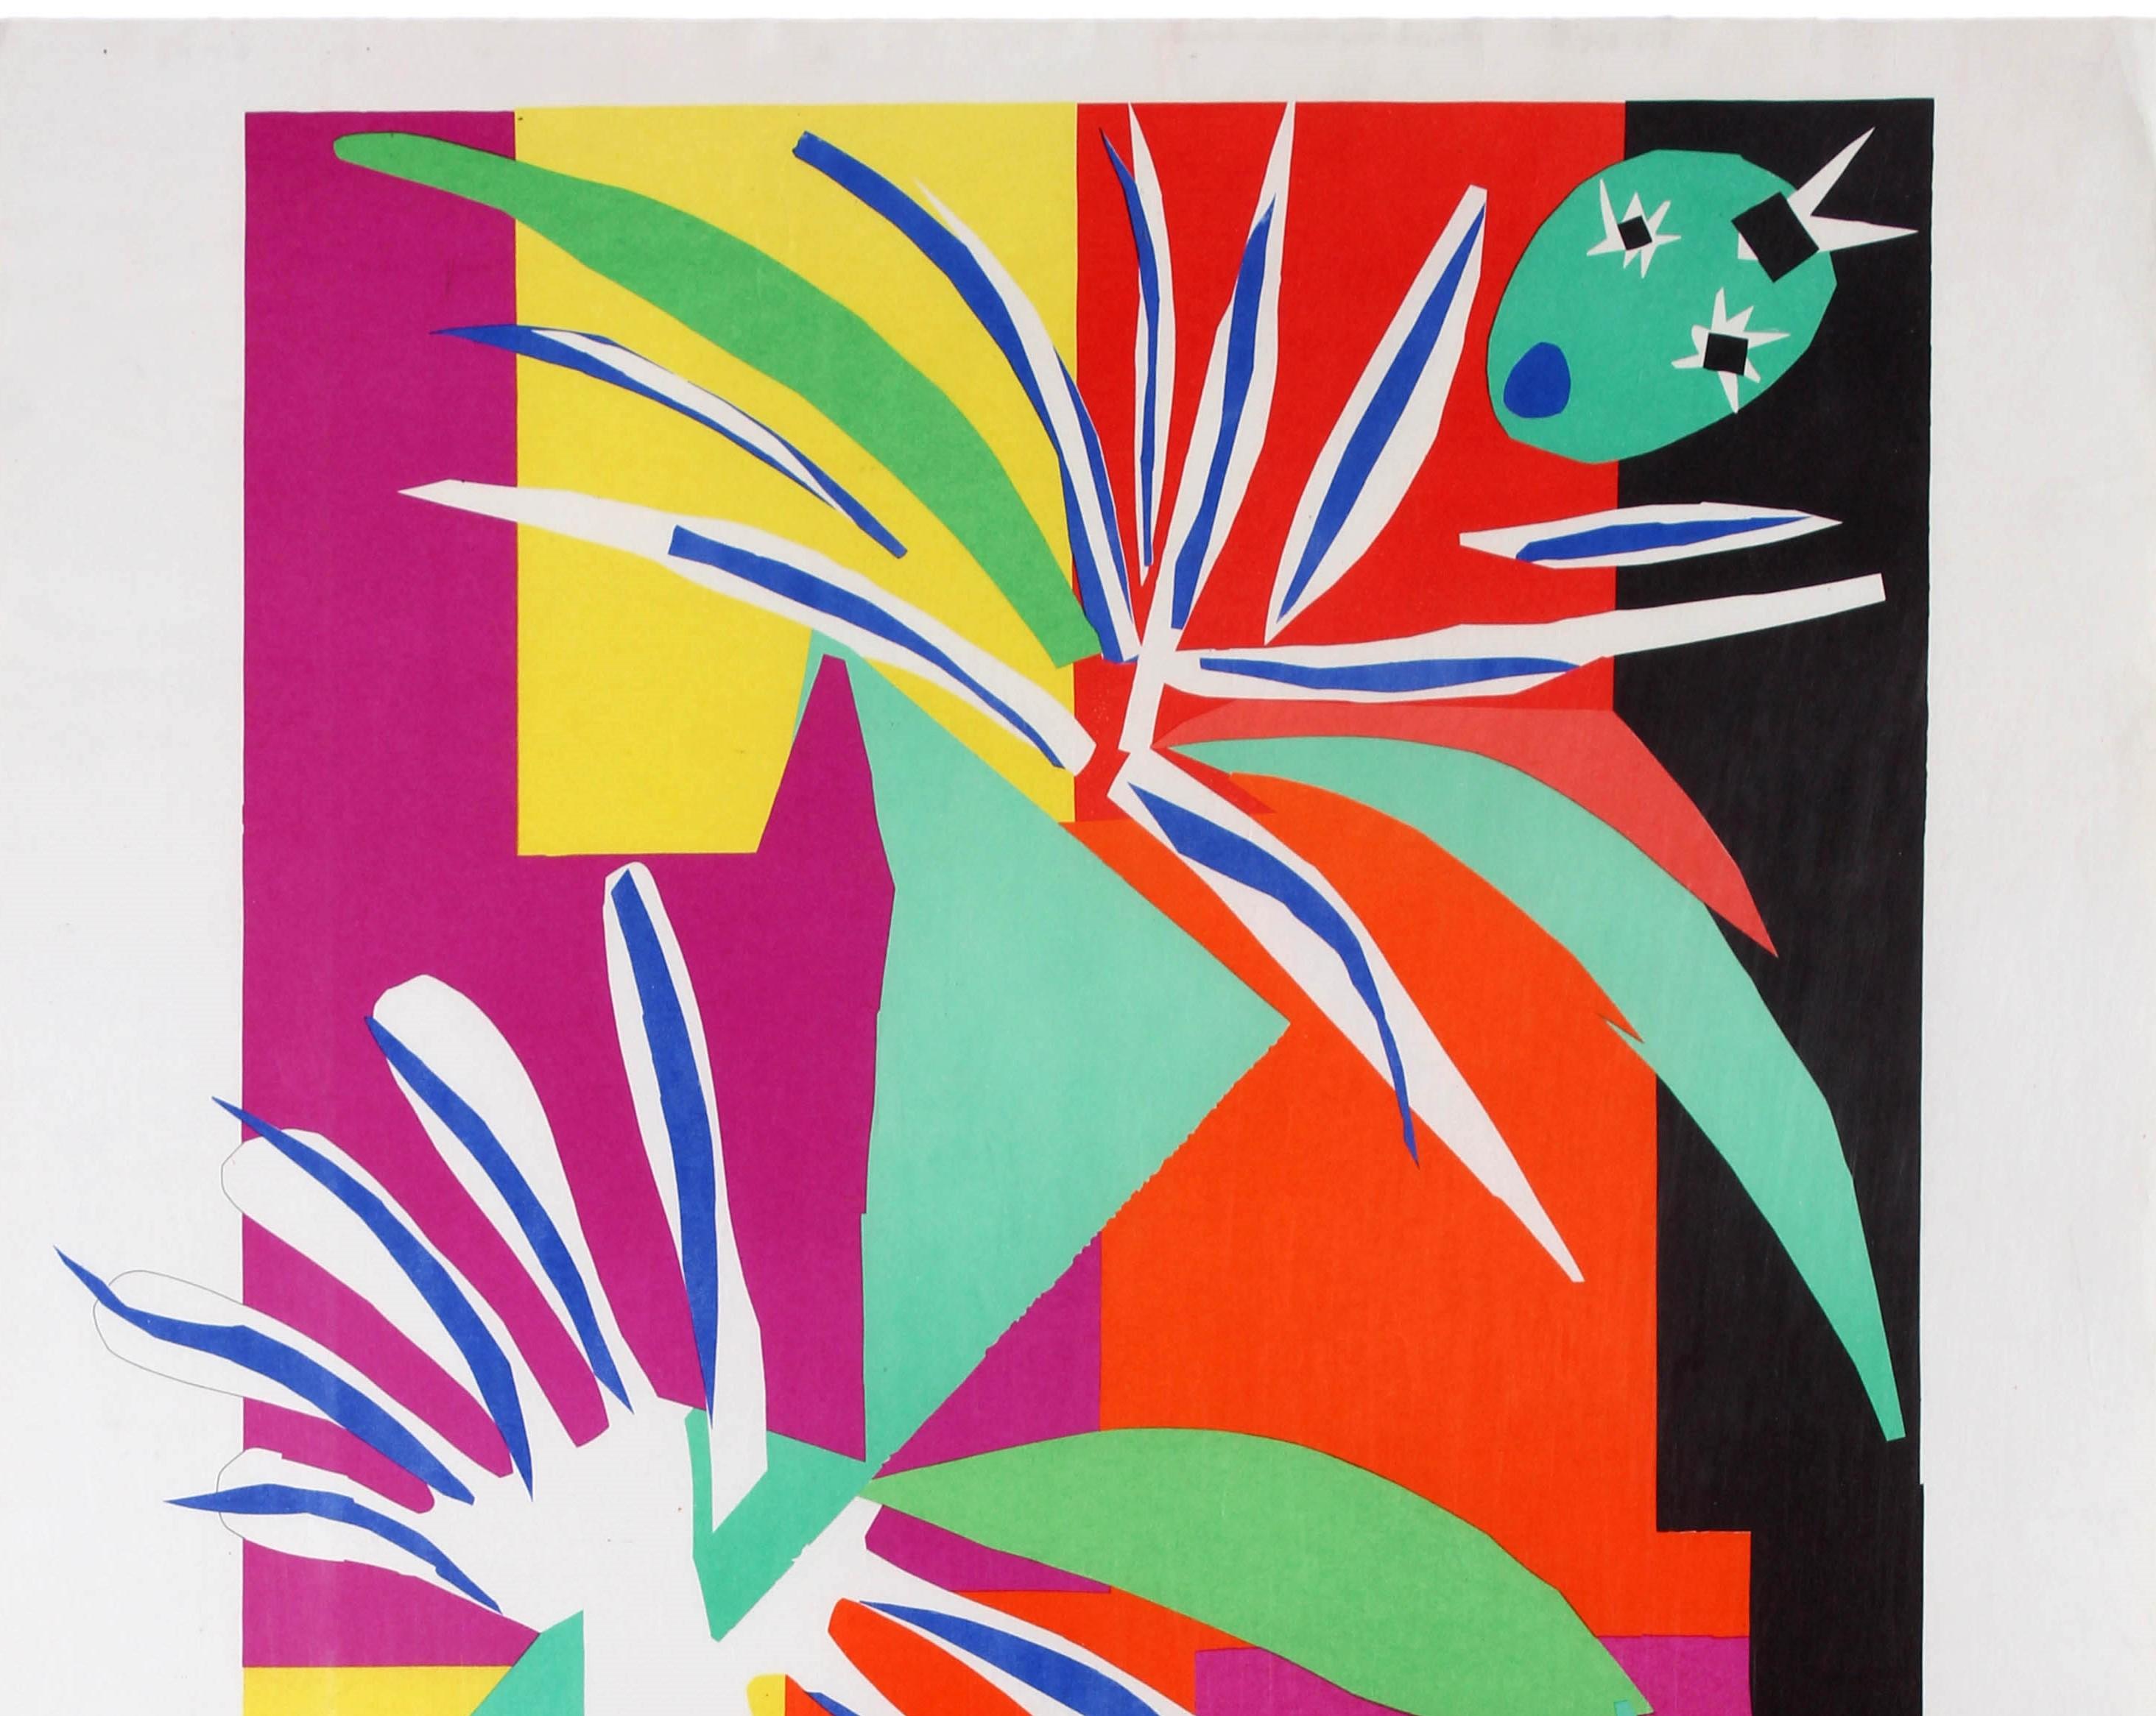 Original Vintage Poster Cote d'Azur Nice Musee Matisse Museum La Danseuse Creole - Print by Henri Matisse